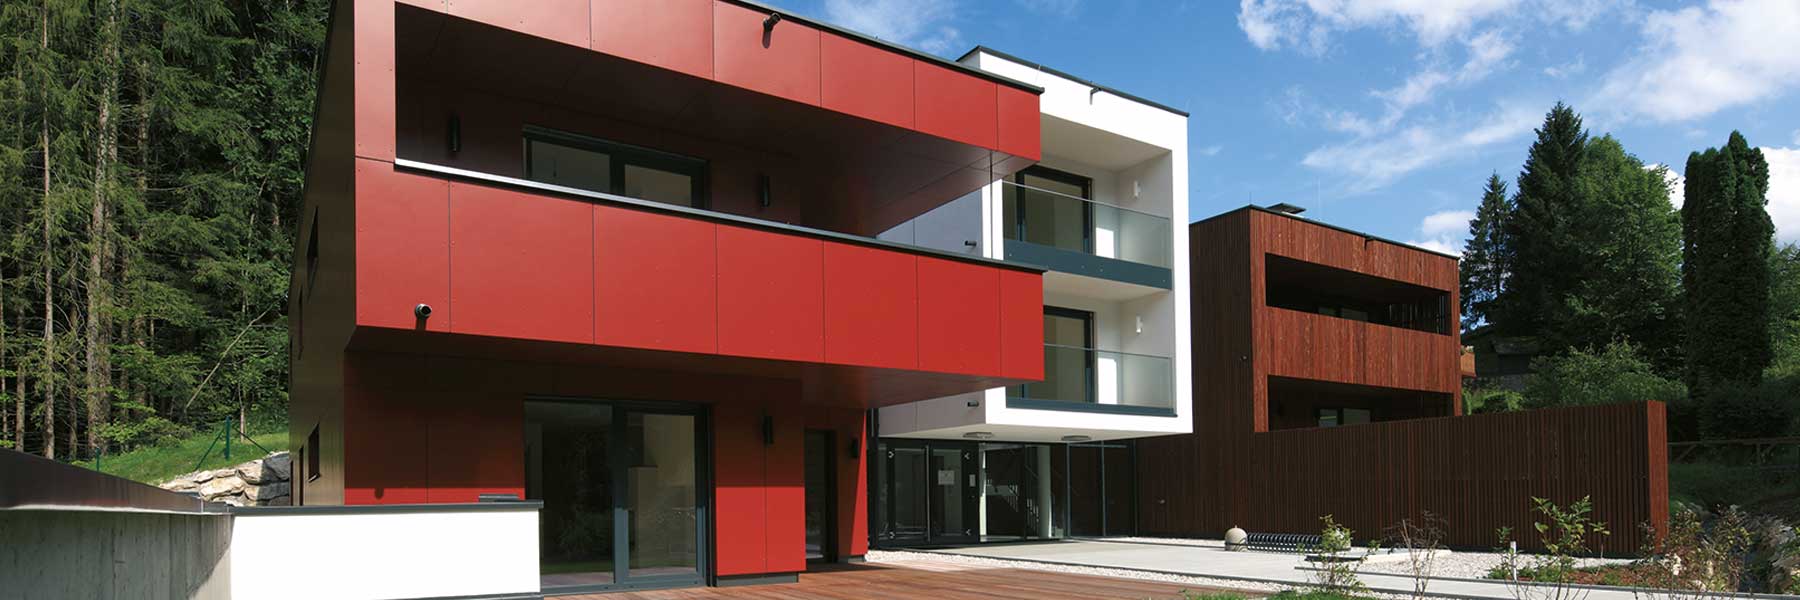 Slider Eternit Zenor Fasserzement Grossformat Fassadenplatten Hpl Platten Kaufen Preis Salzburg